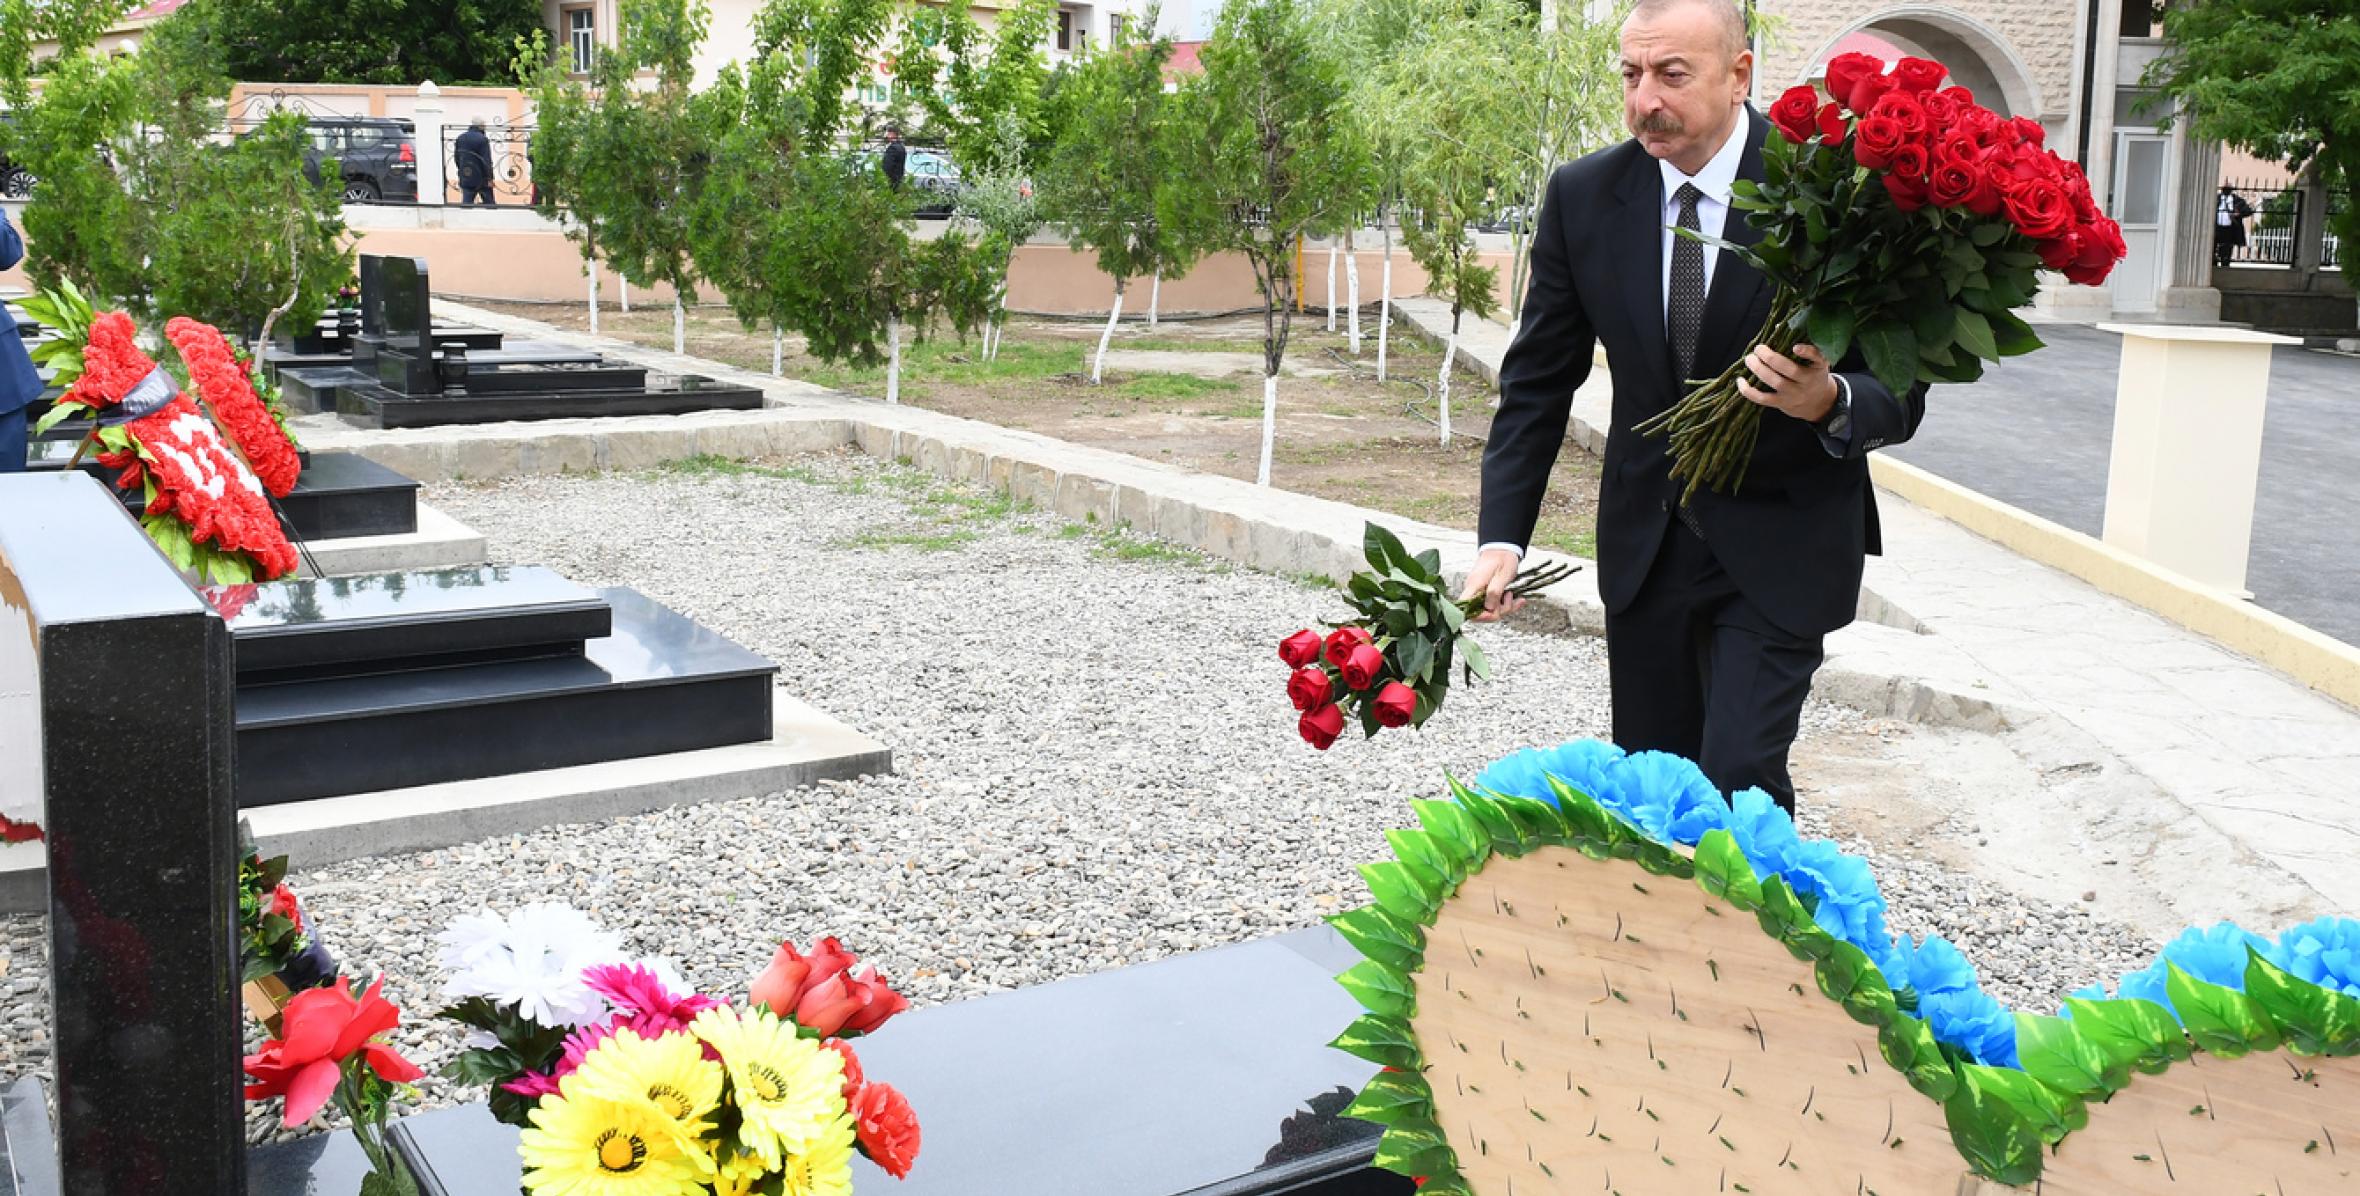 Ilham Aliyev ended his visit to Nakhchivan Autonomous Republic